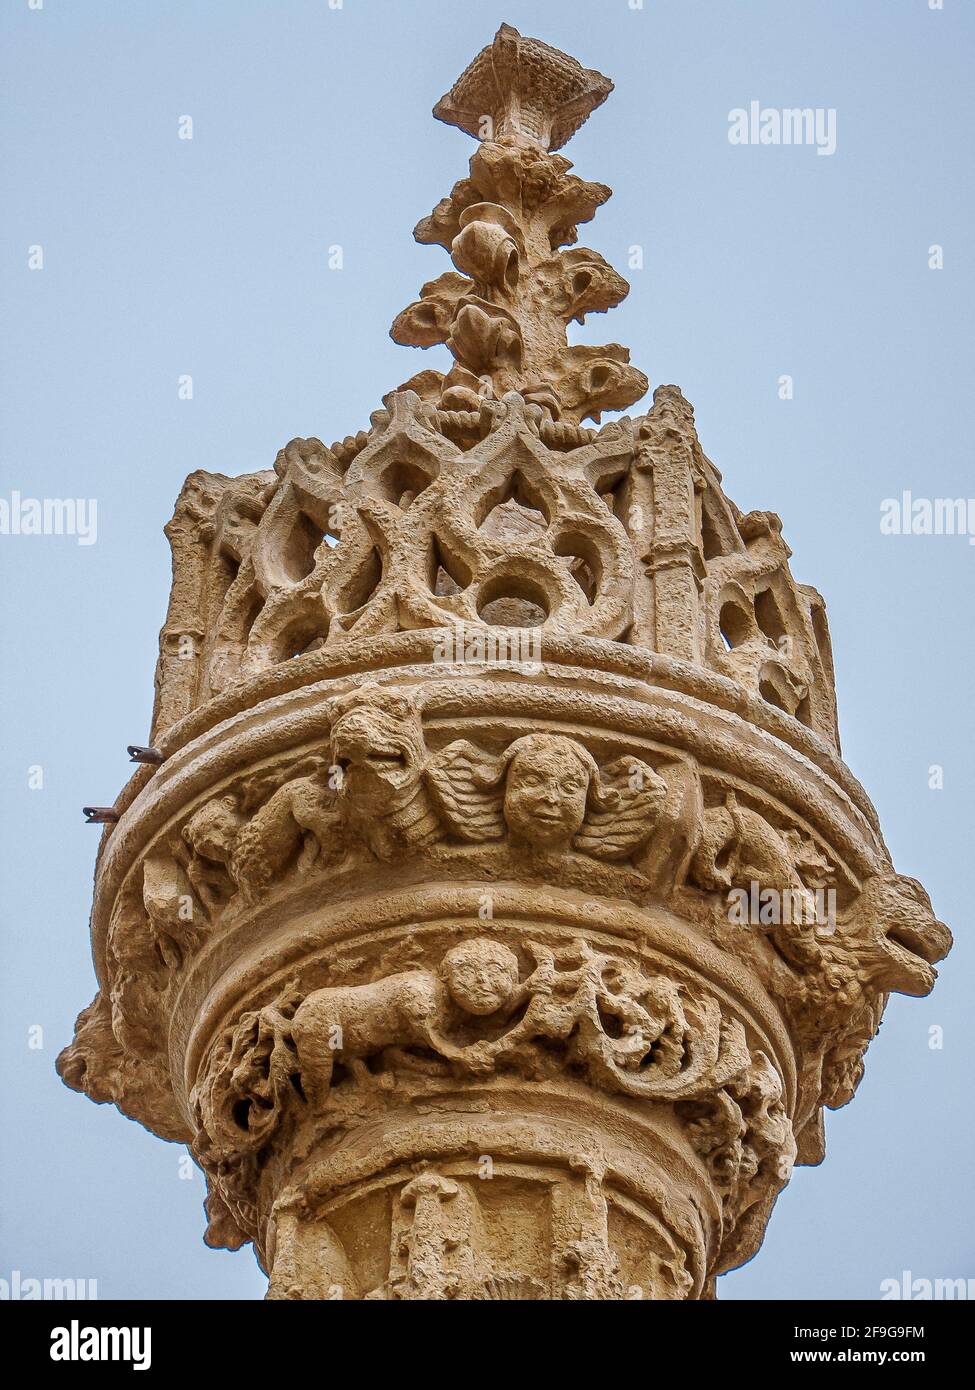 the medieval jurisdictional column Rollo with sculptured figures on the camino de santiago at Boadilla del Camino, Spain, October 21, 2009 Stock Photo